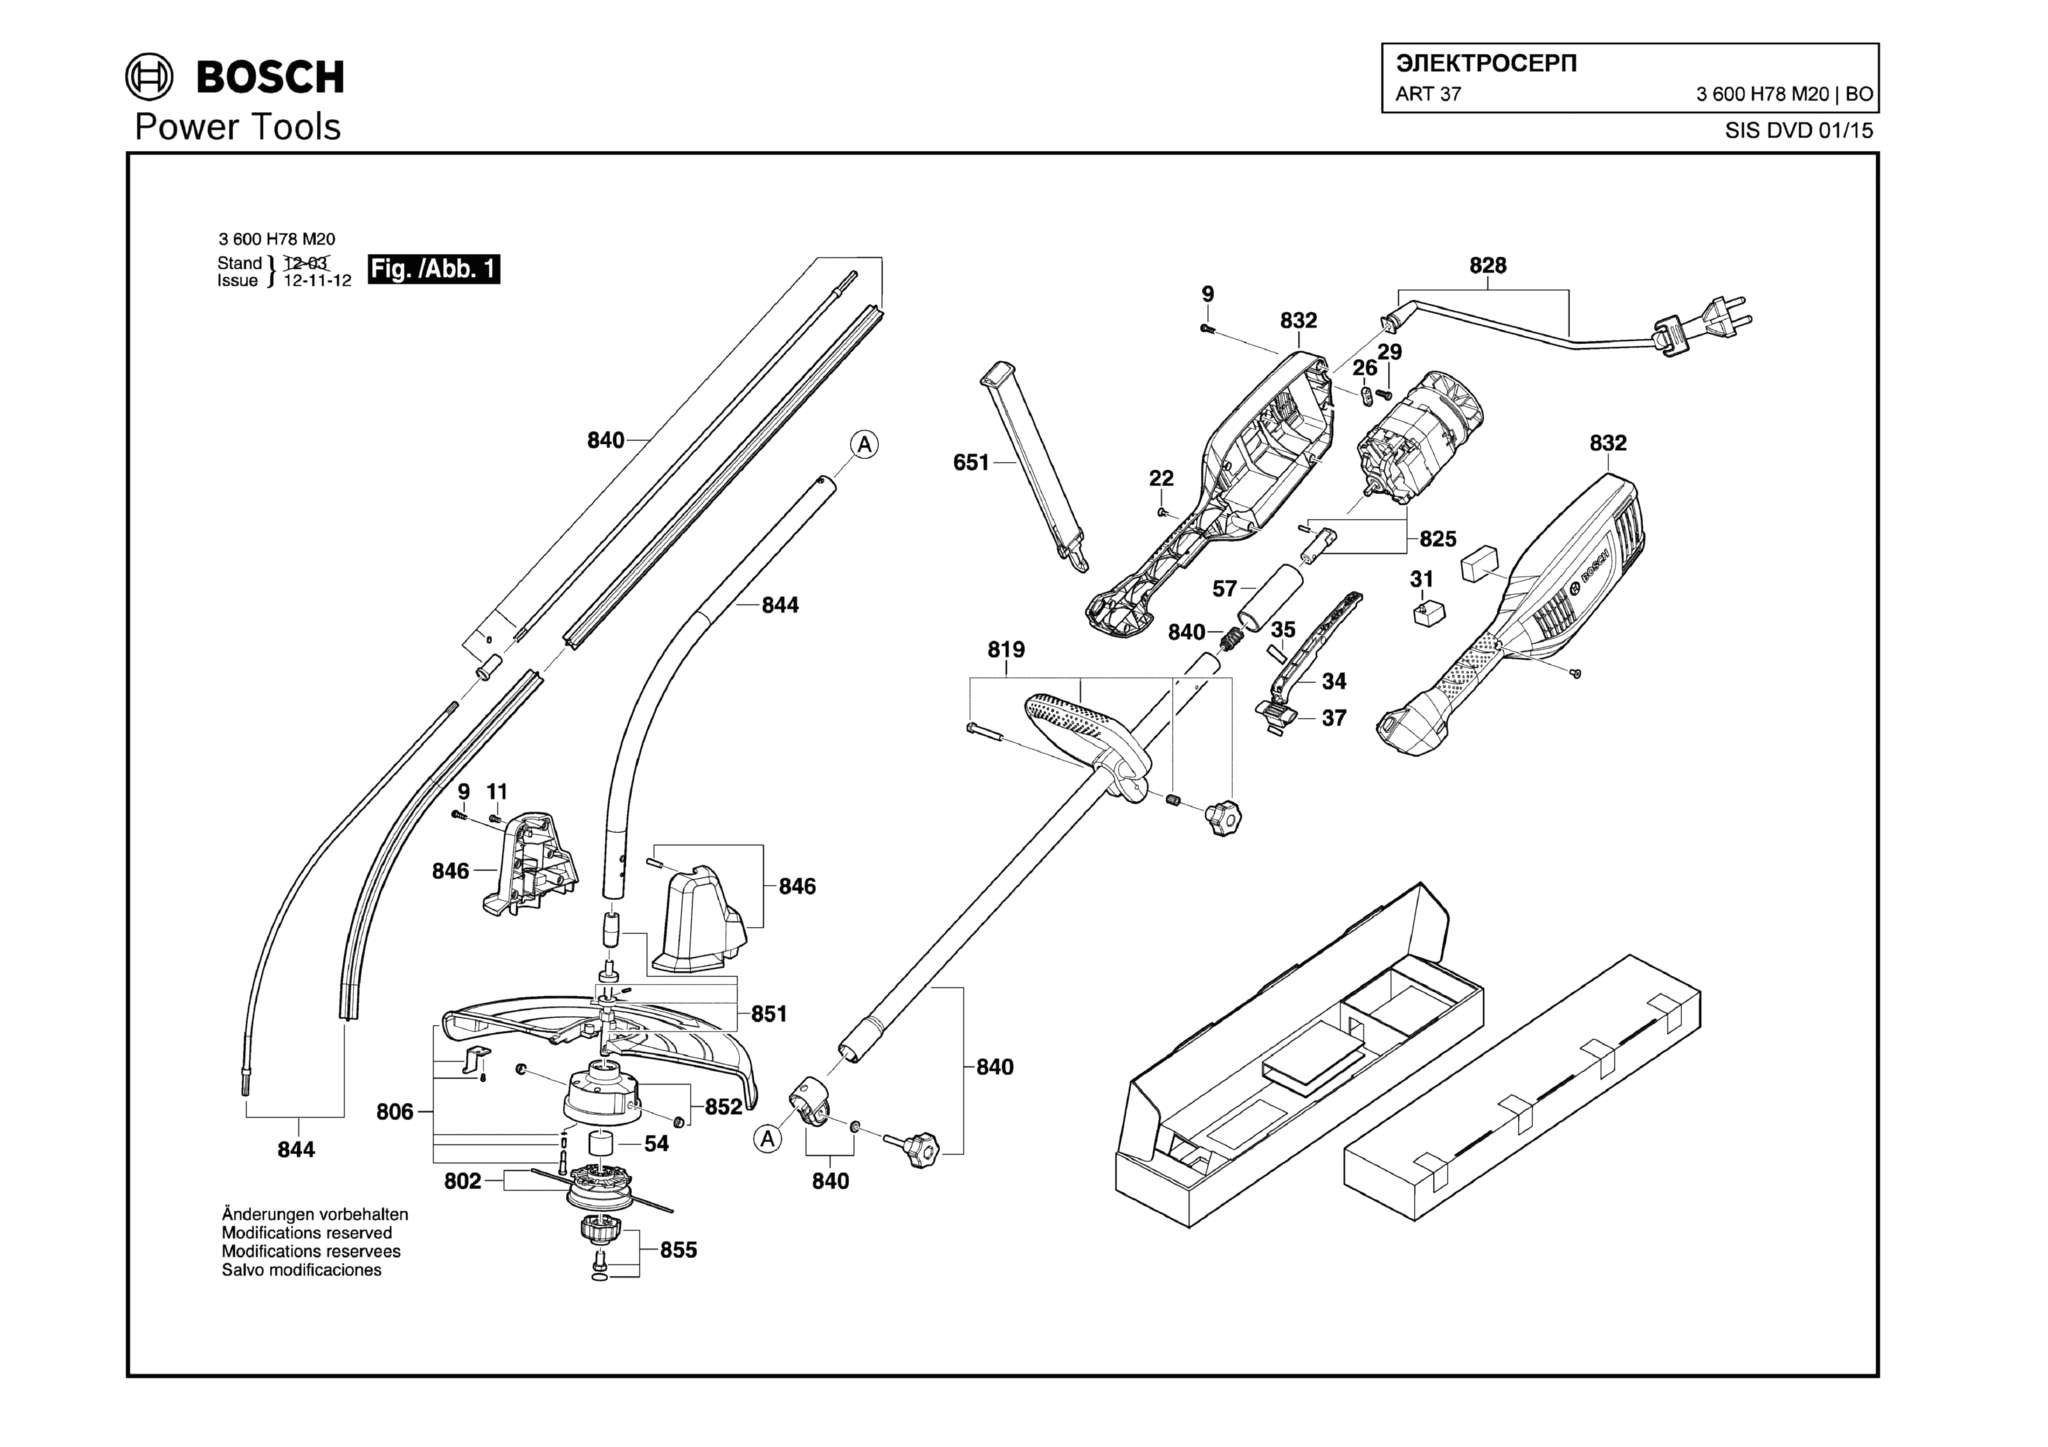 Запчасти, схема и деталировка Bosch ART 37 (ТИП 3600H78M20)